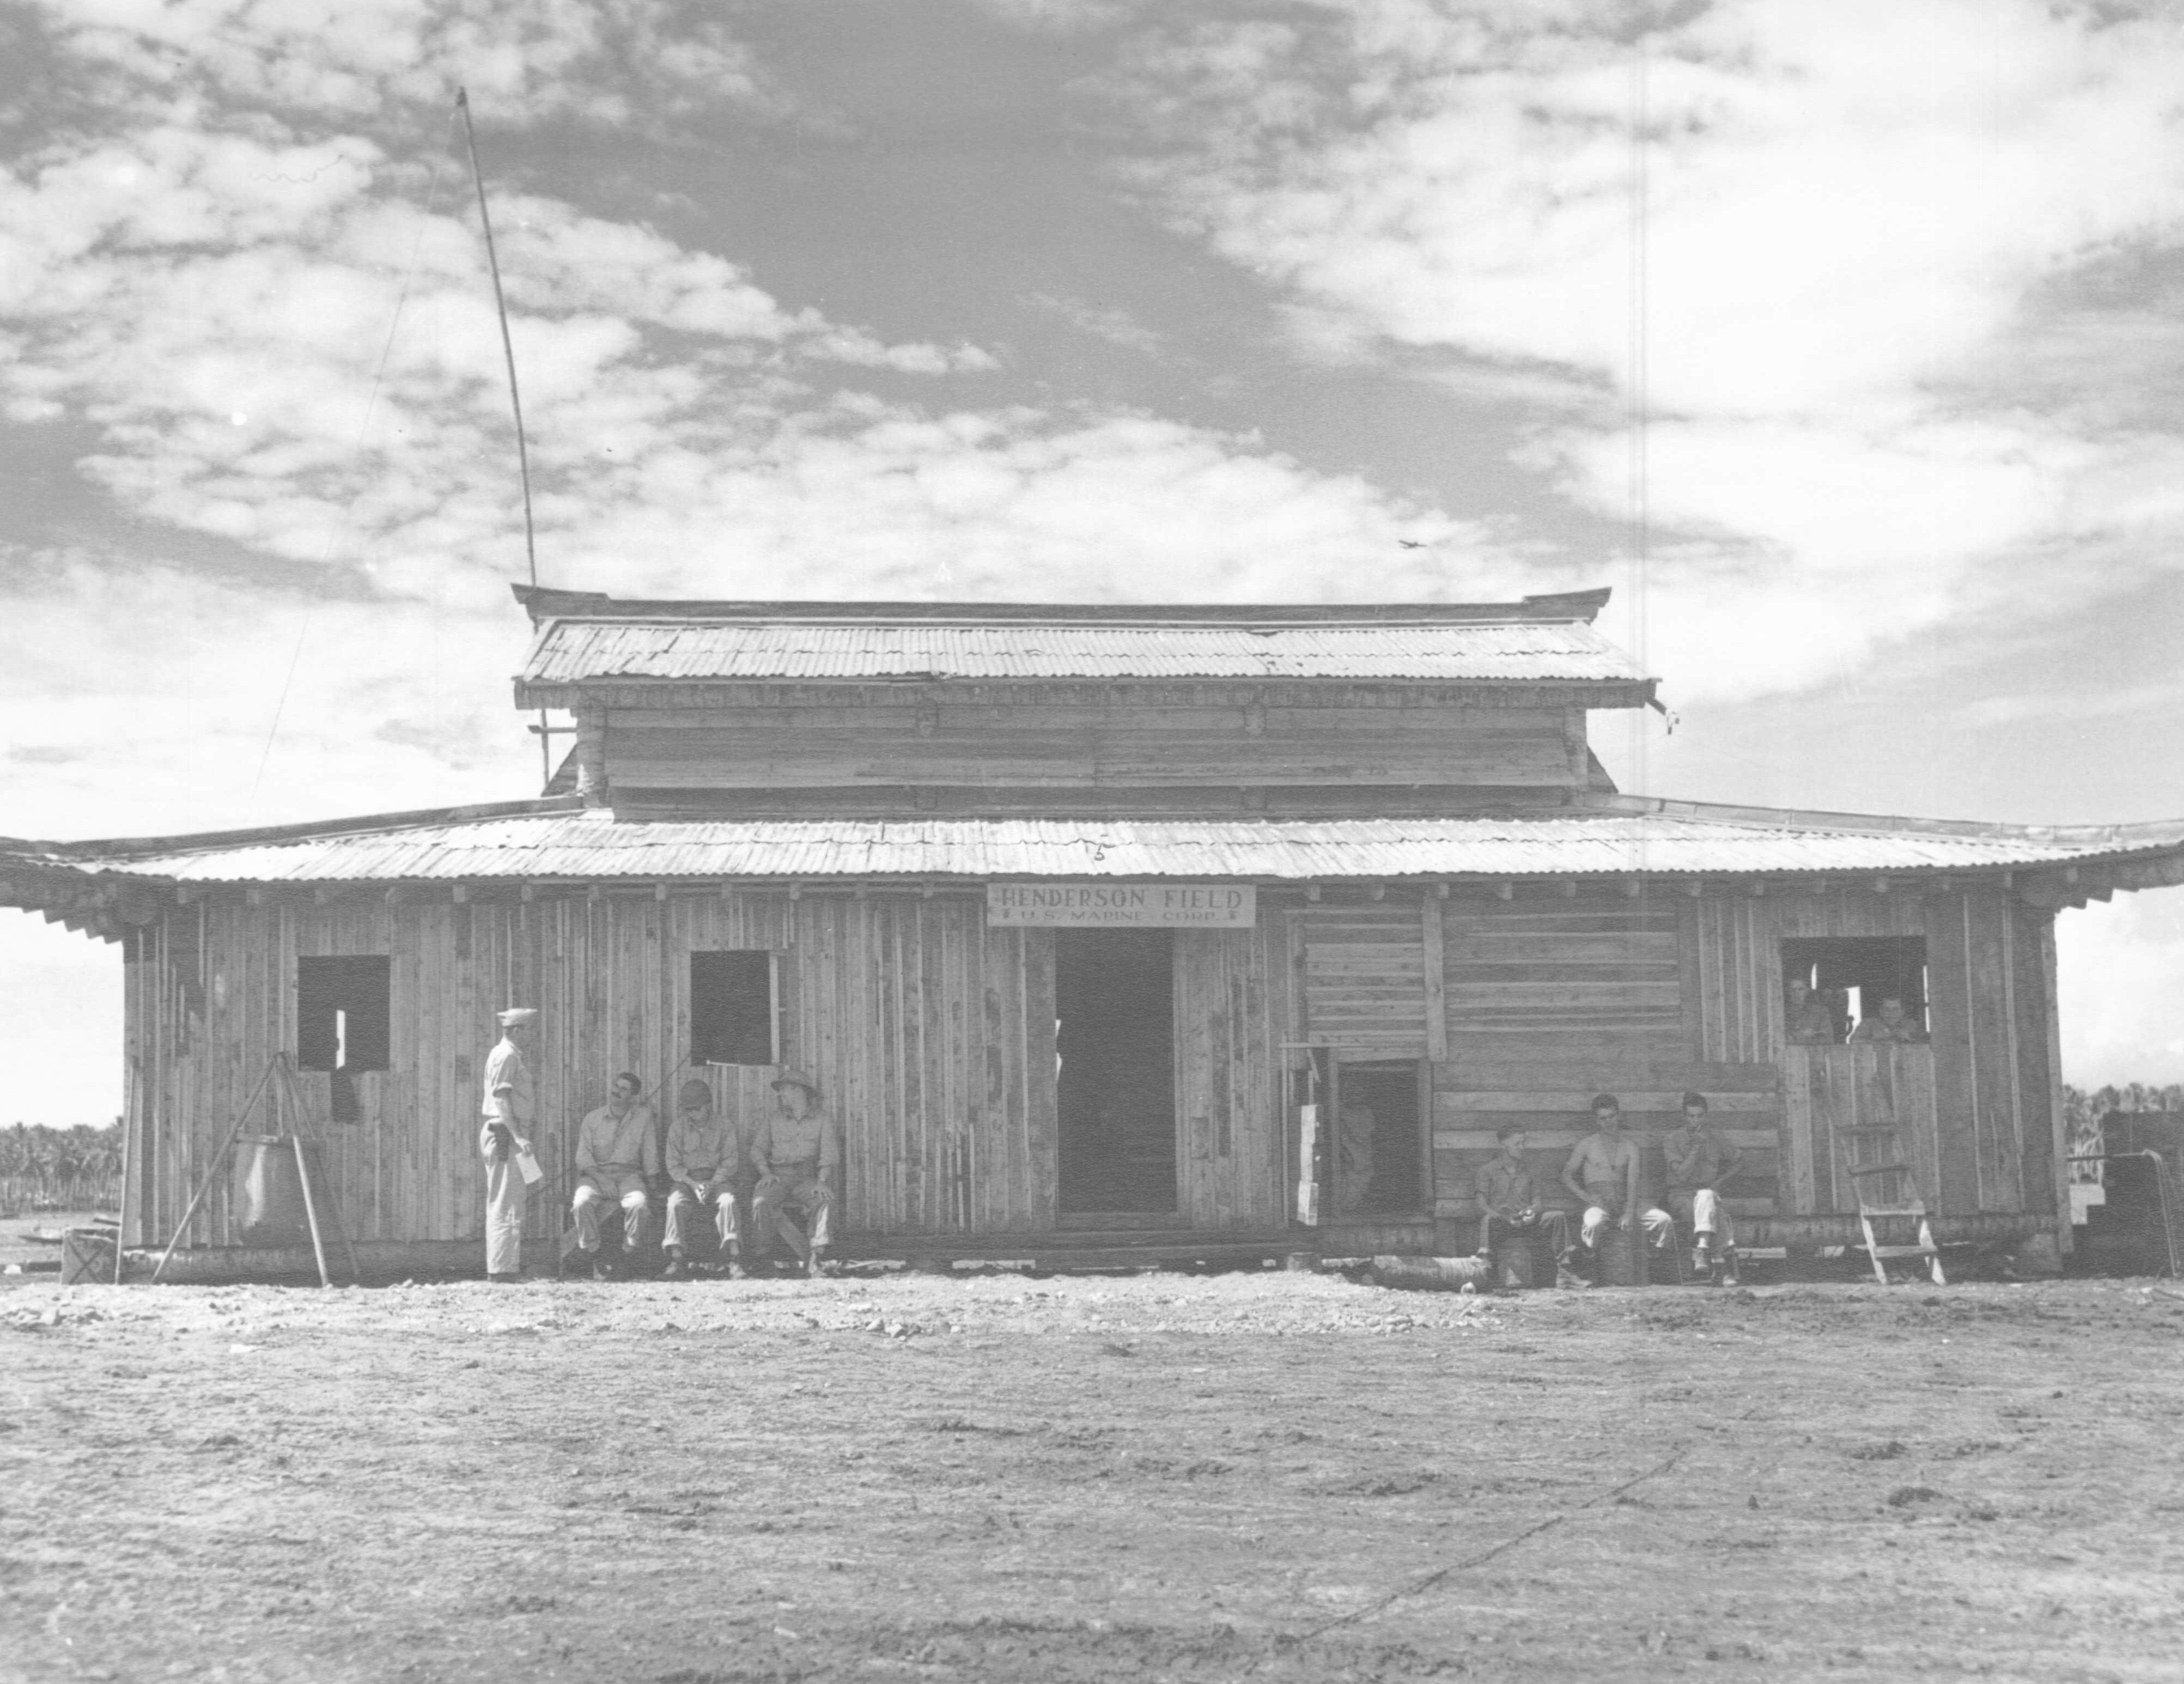 Henderson Field headquarters building, Guadalcanal, Solomon Islands, Dec 1942